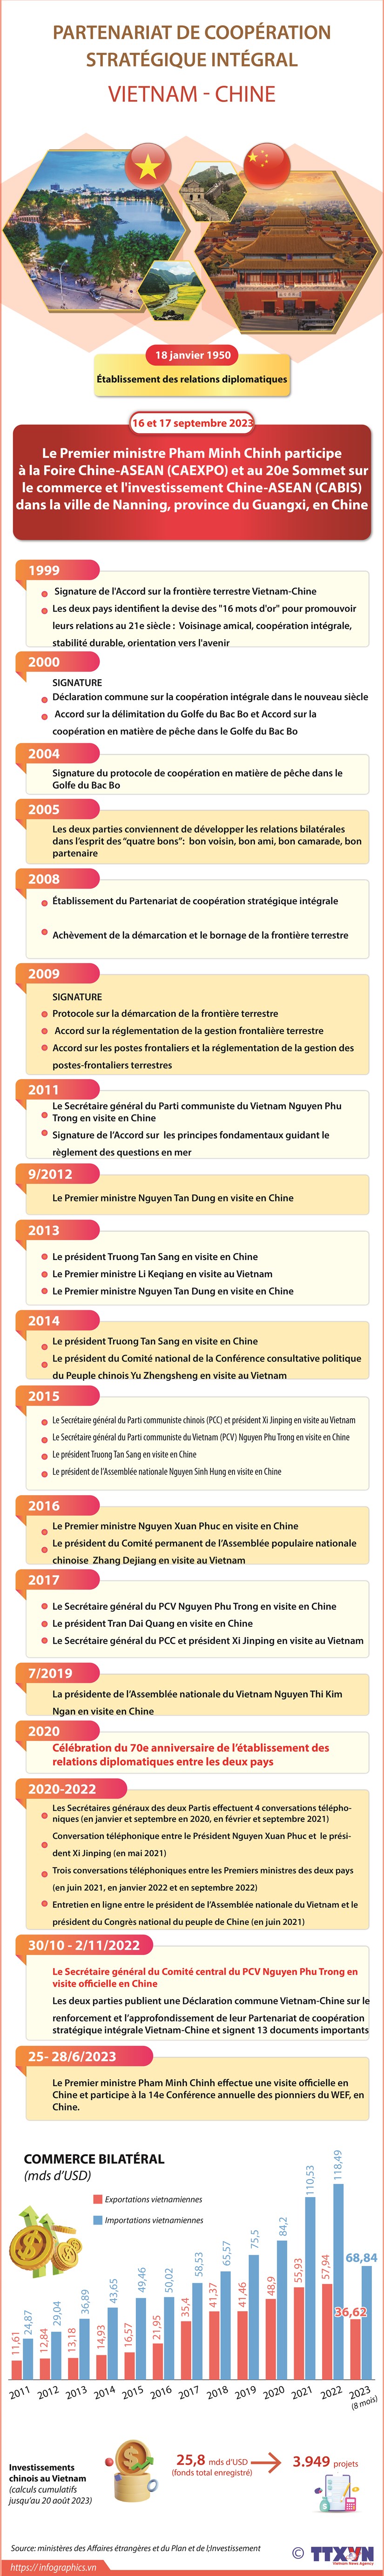 Partenariat de cooperation strategique integral Vietnam-Chine hinh anh 1